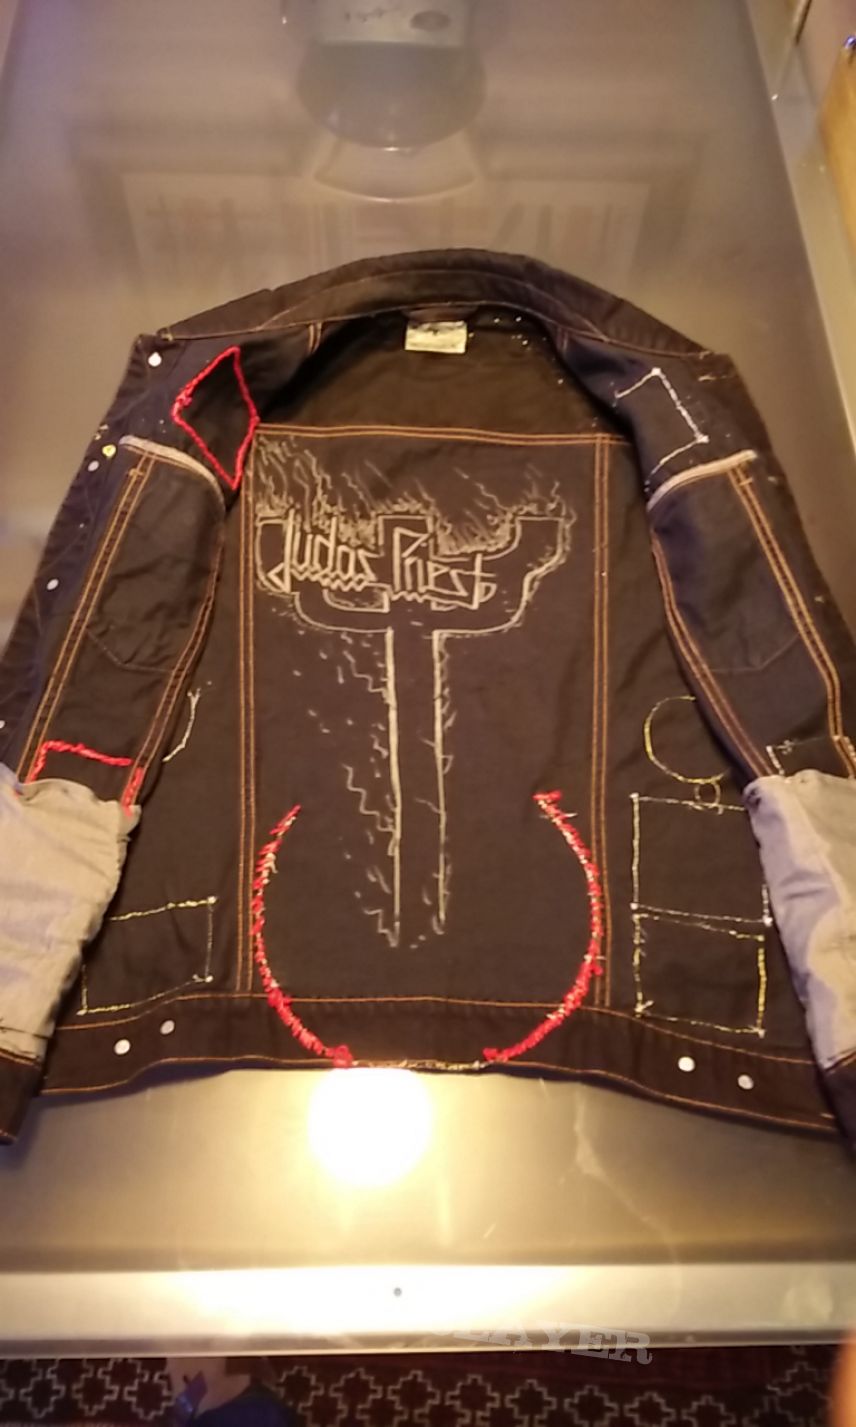 Battle Jacket tribute to Judas Priest